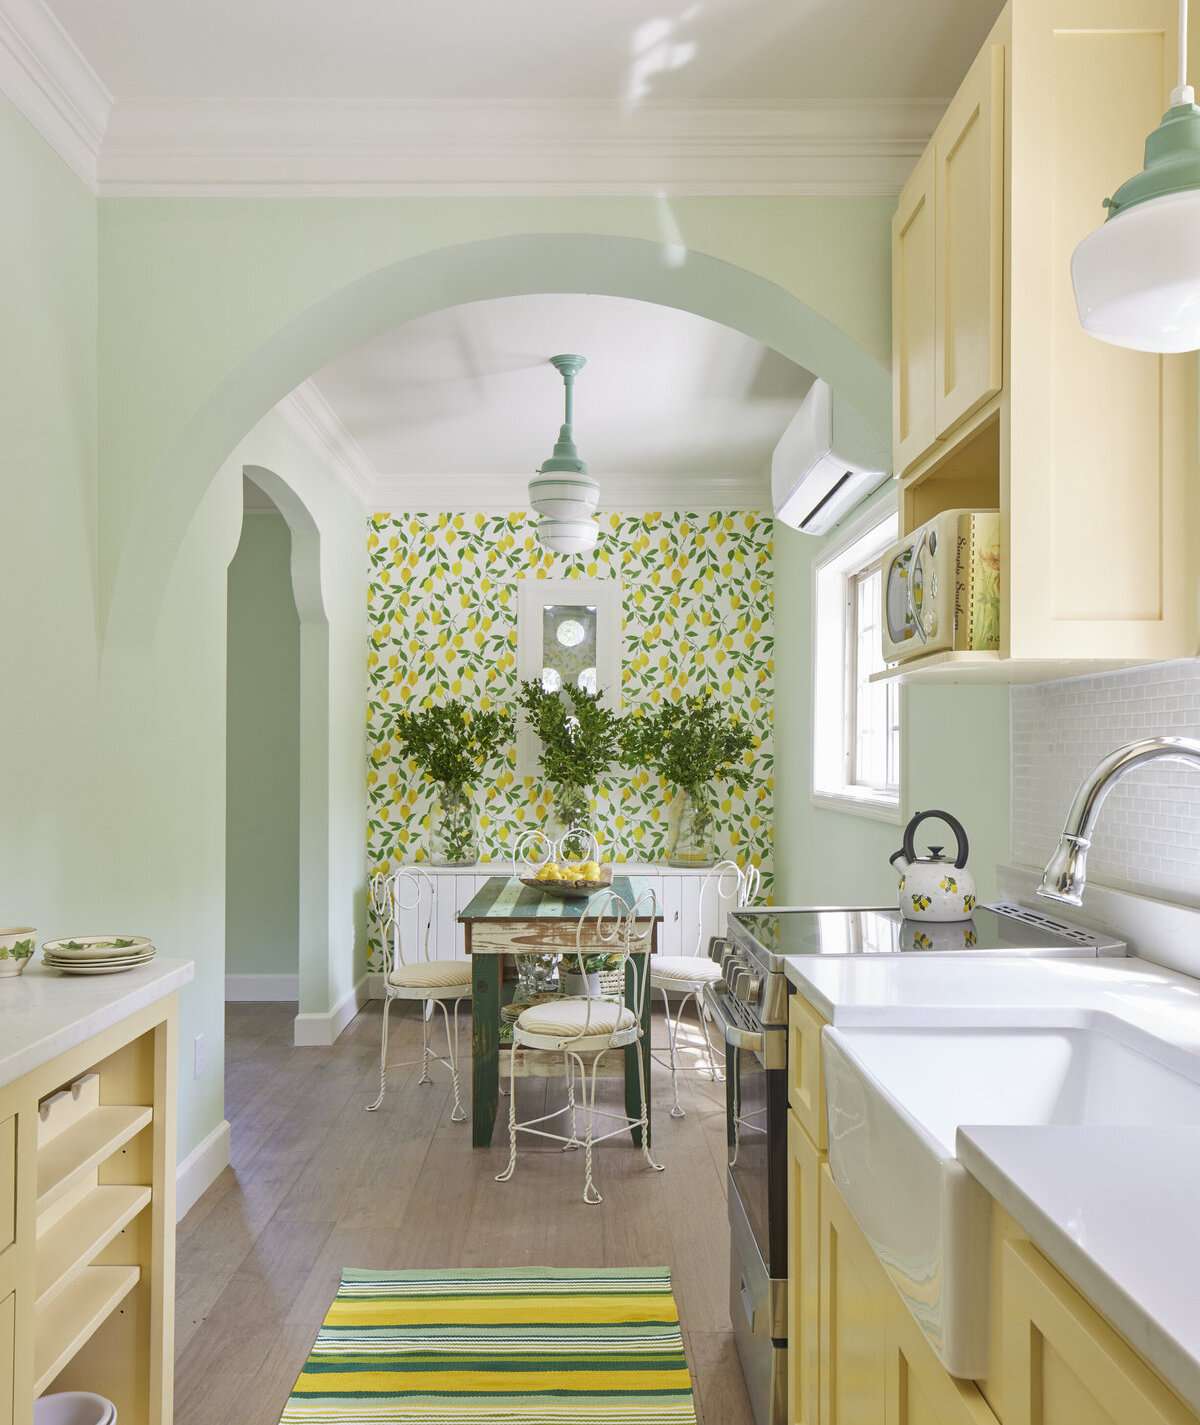 Cuisine et salle à manger jaune vif et vert menthe design.